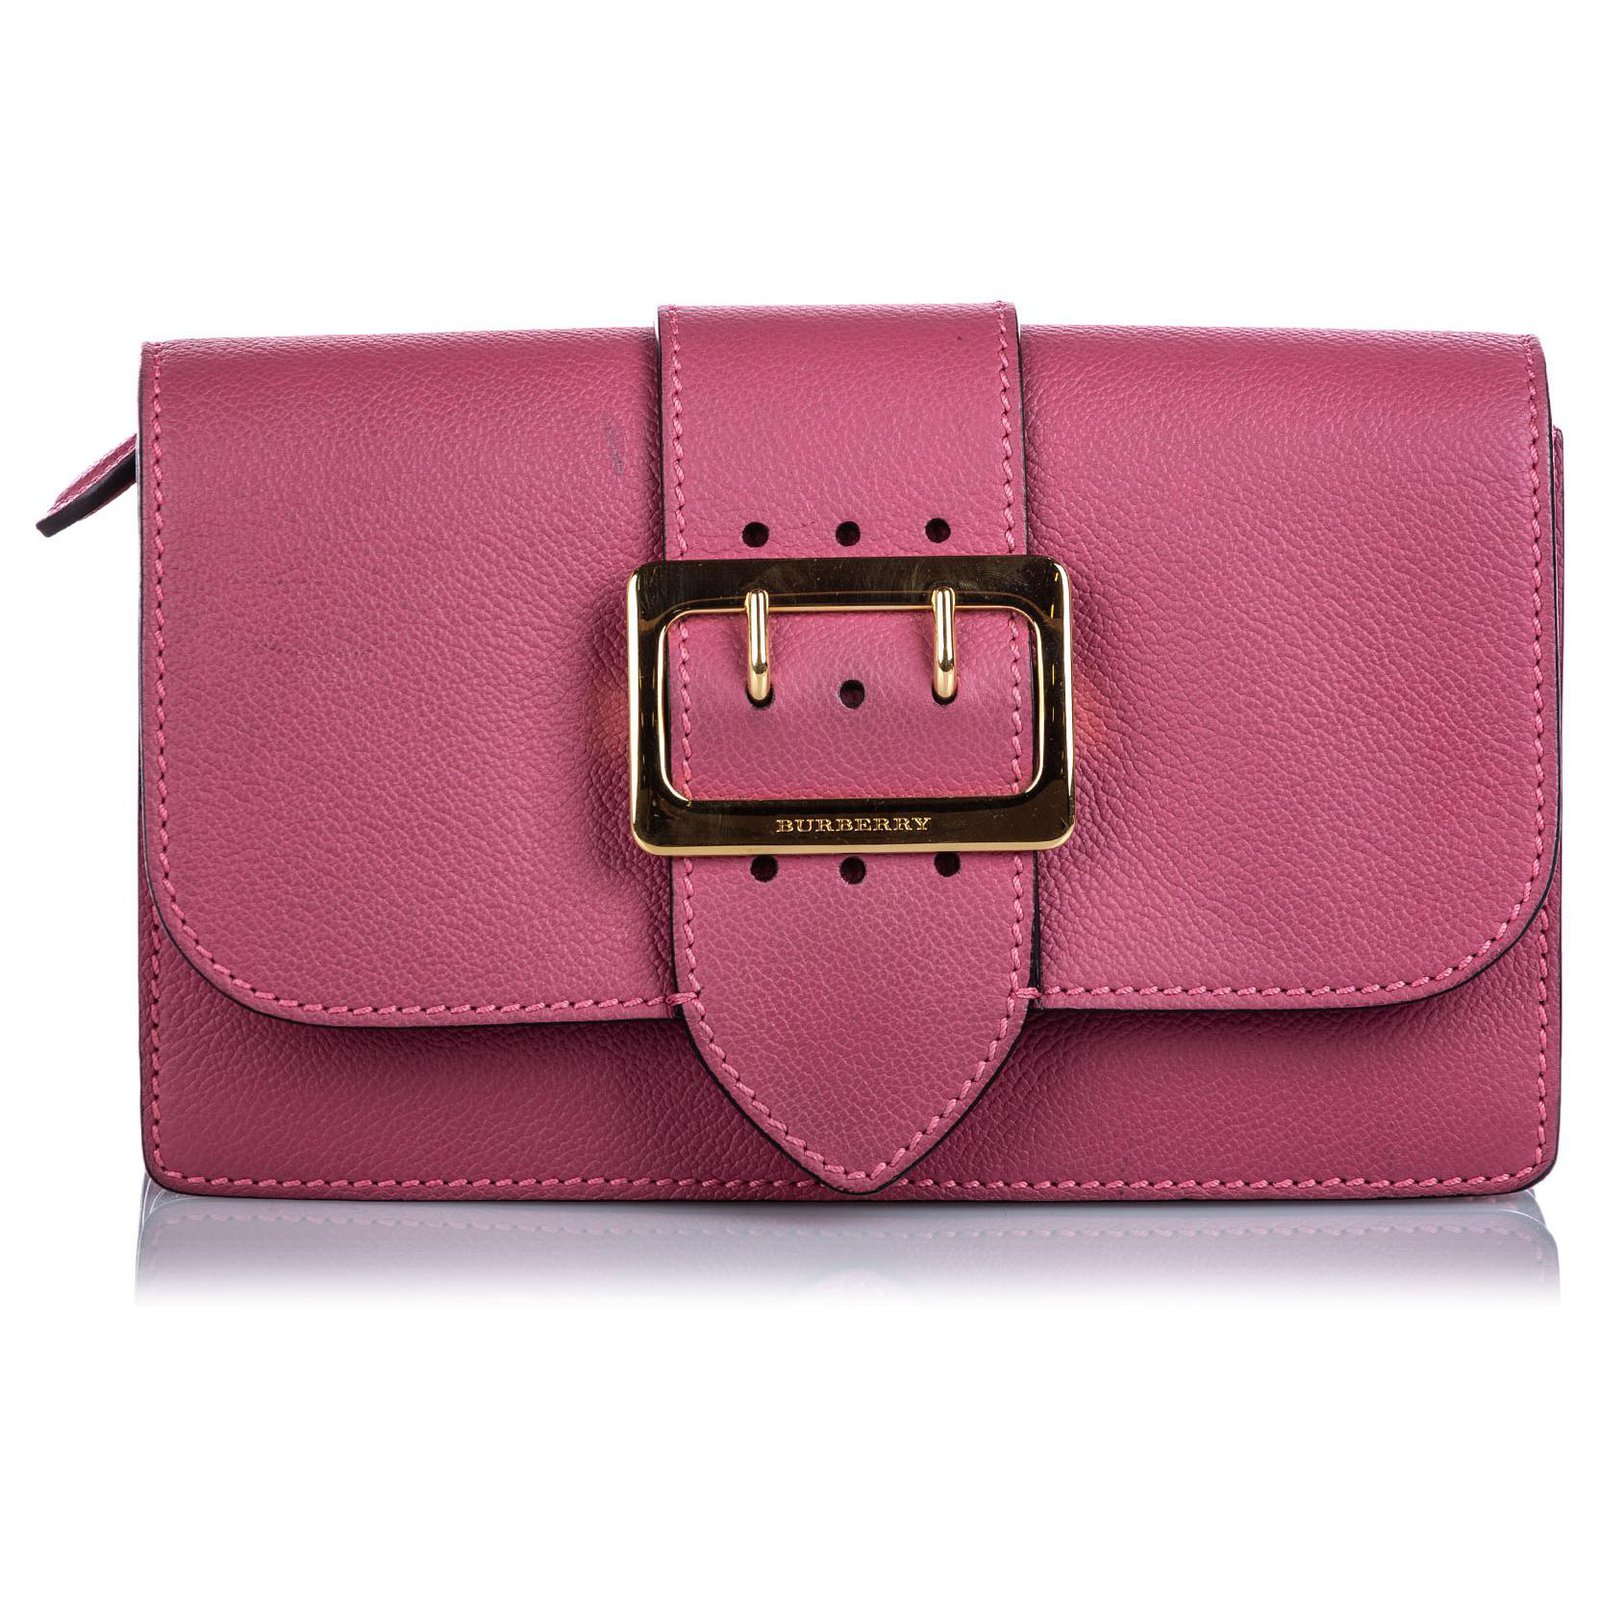 burberry handbags pink